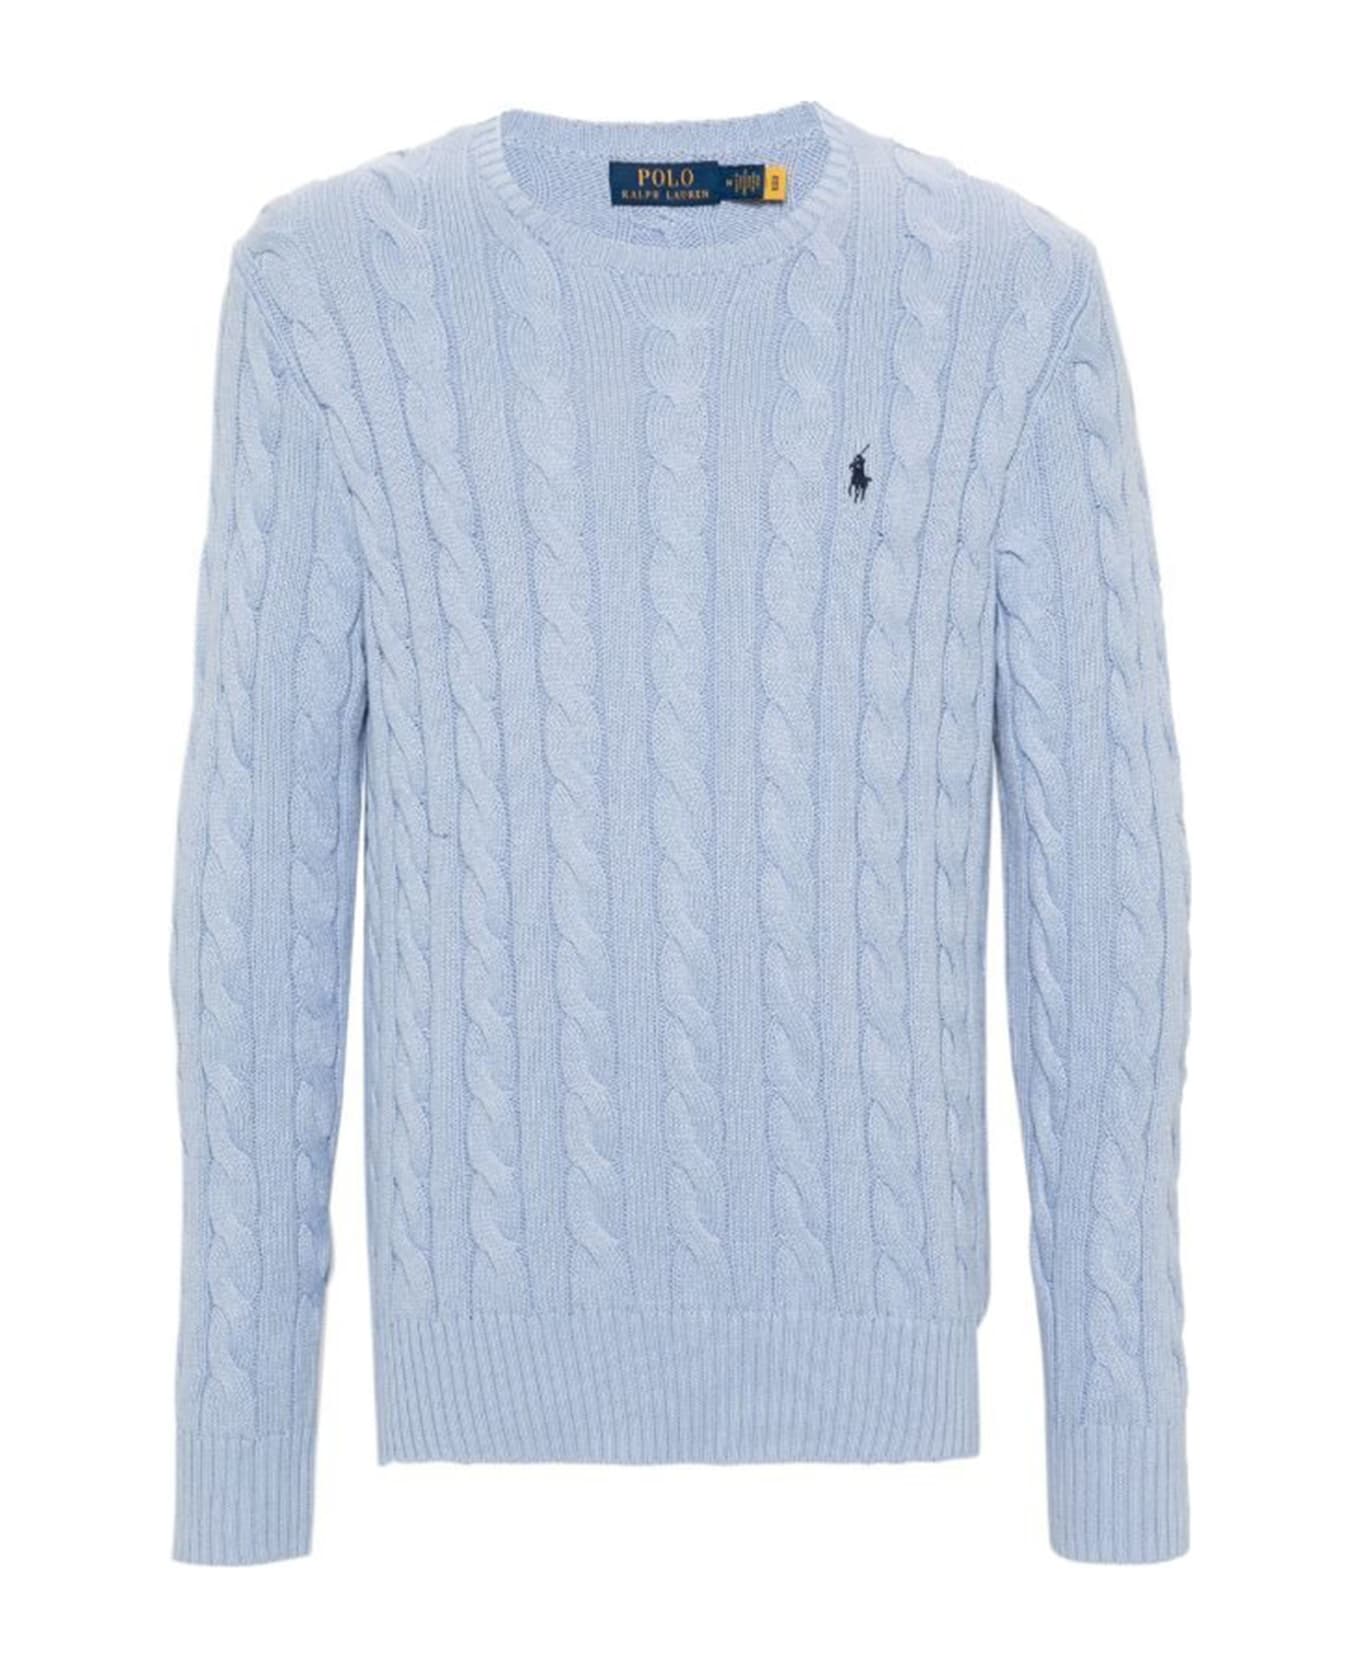 Polo Ralph Lauren Sweater - BLUE HYACINTH